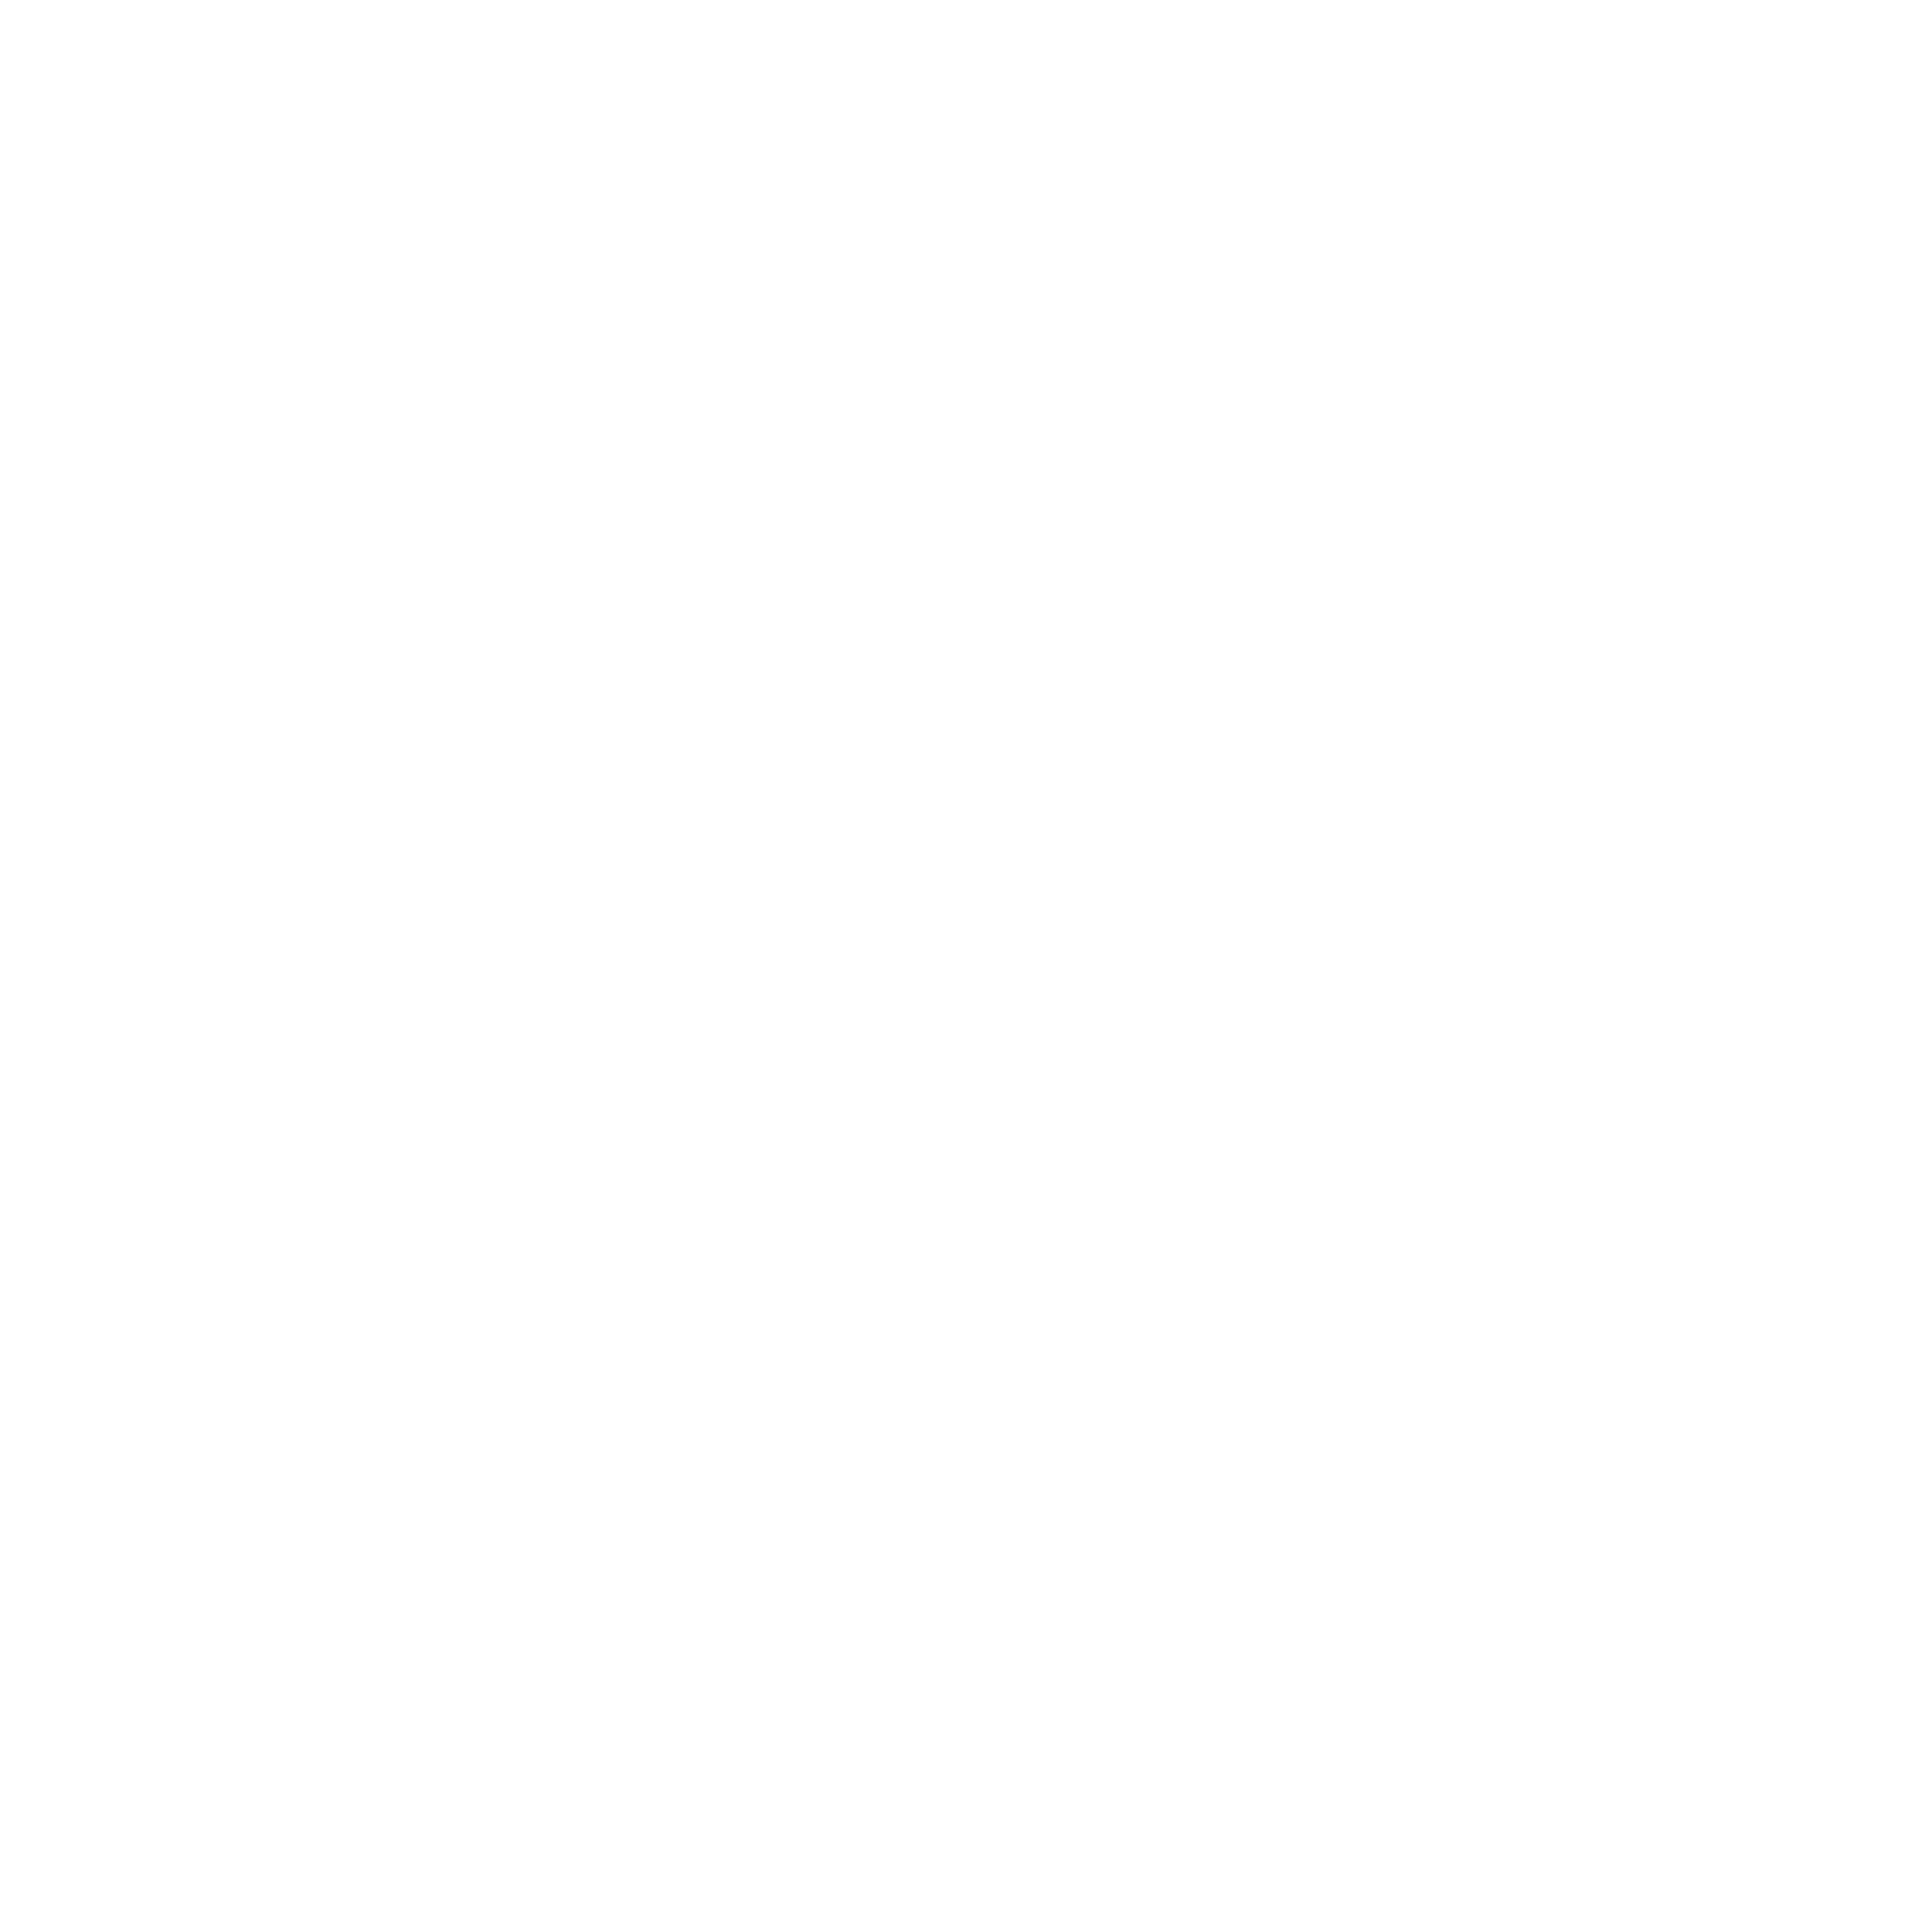 community icon